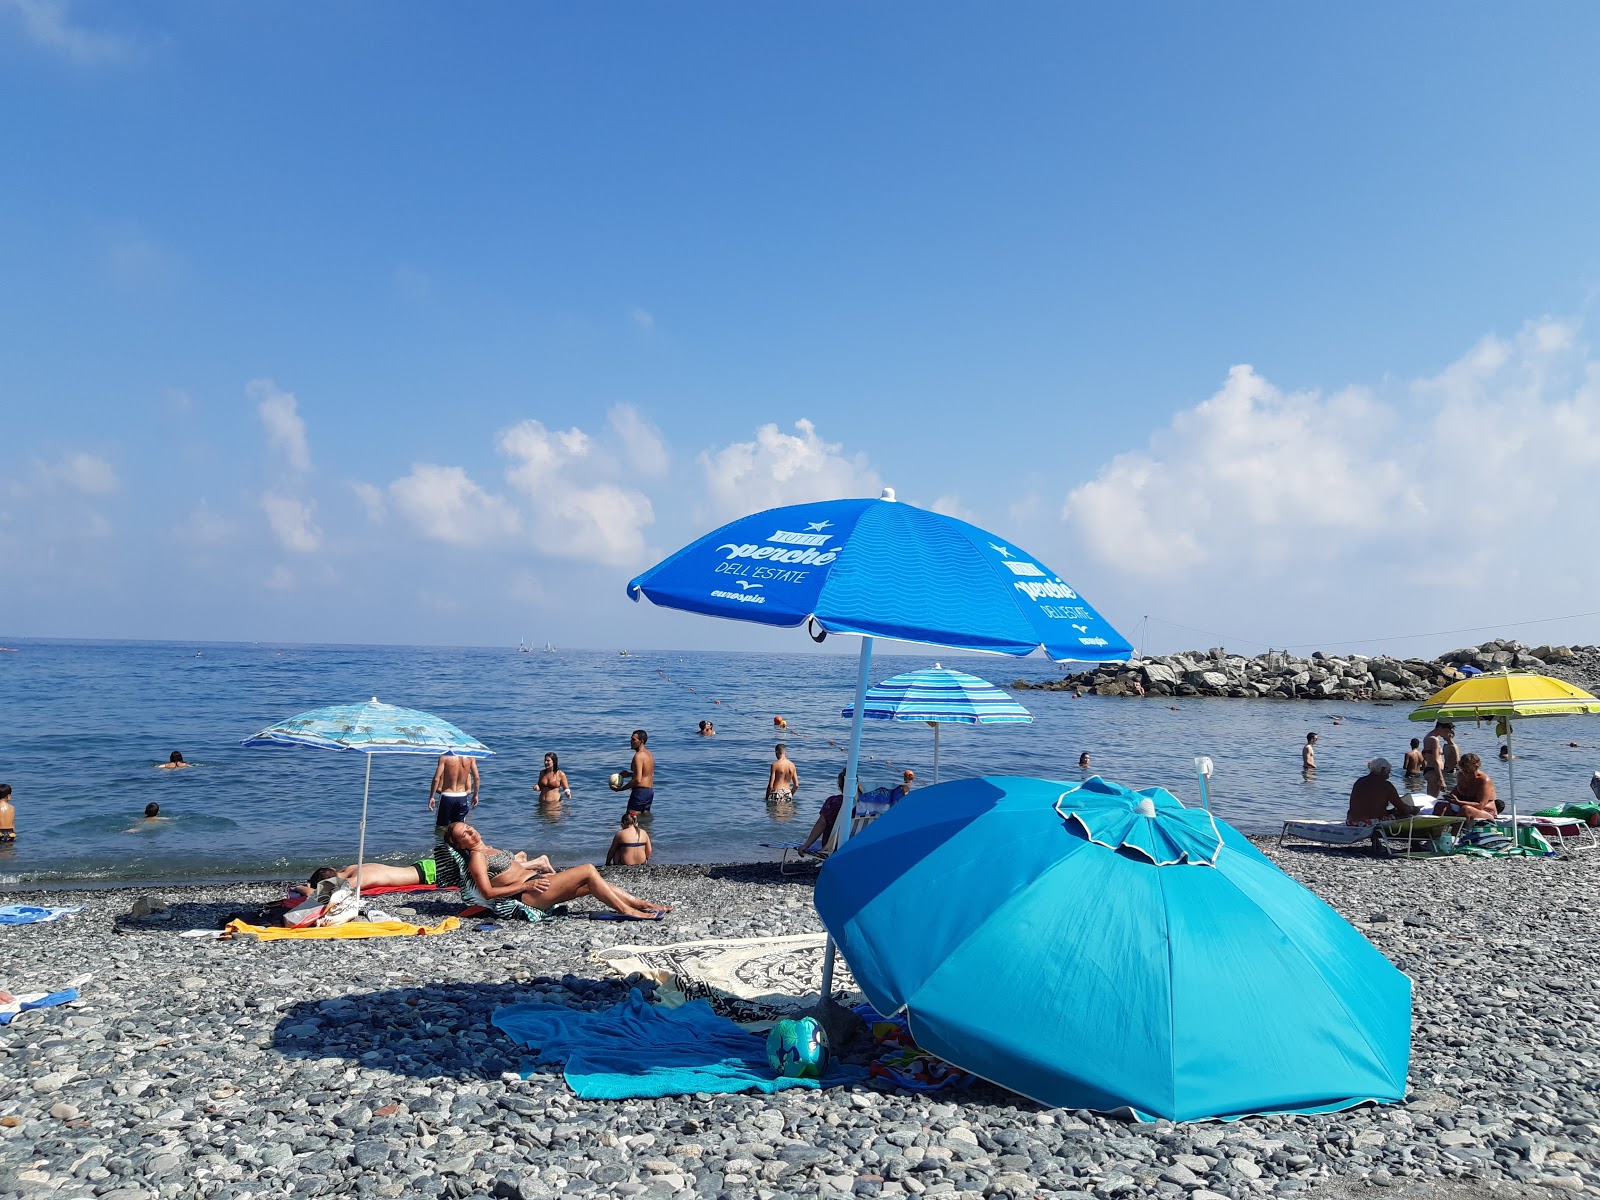 Foto av Spiaggia Olanda med blå rent vatten yta